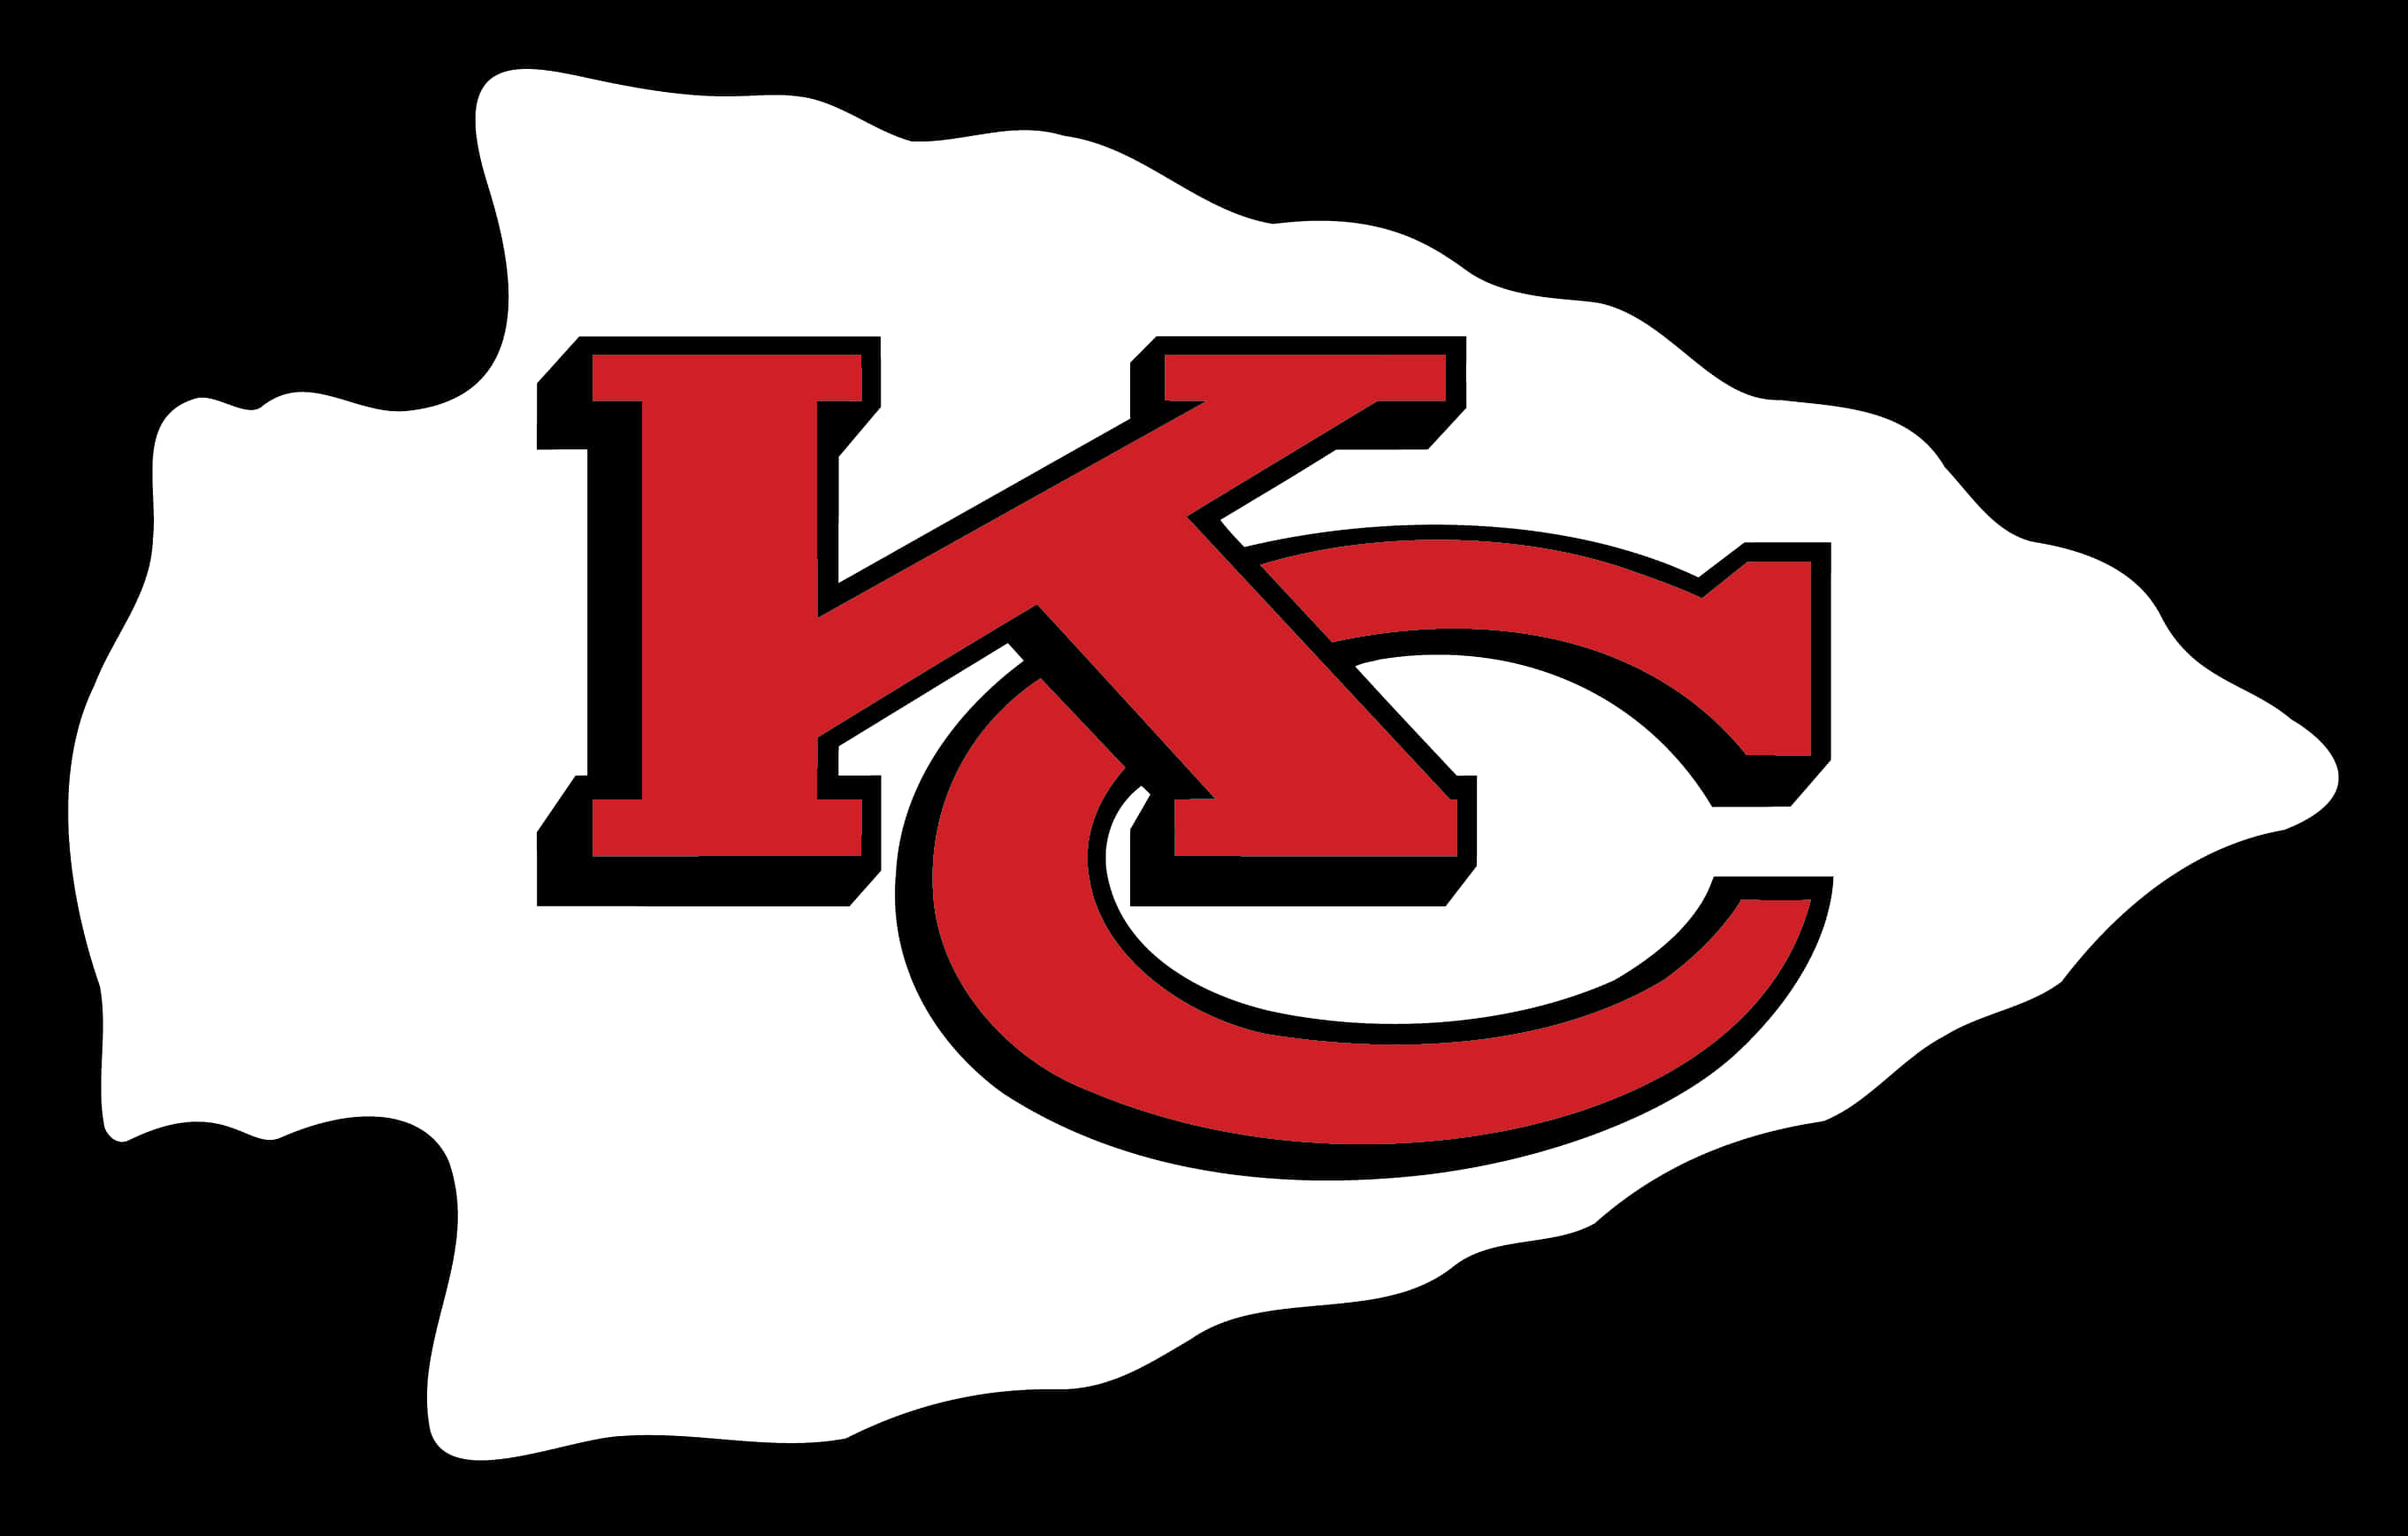 Kansas City Chiefs Logo PNG image